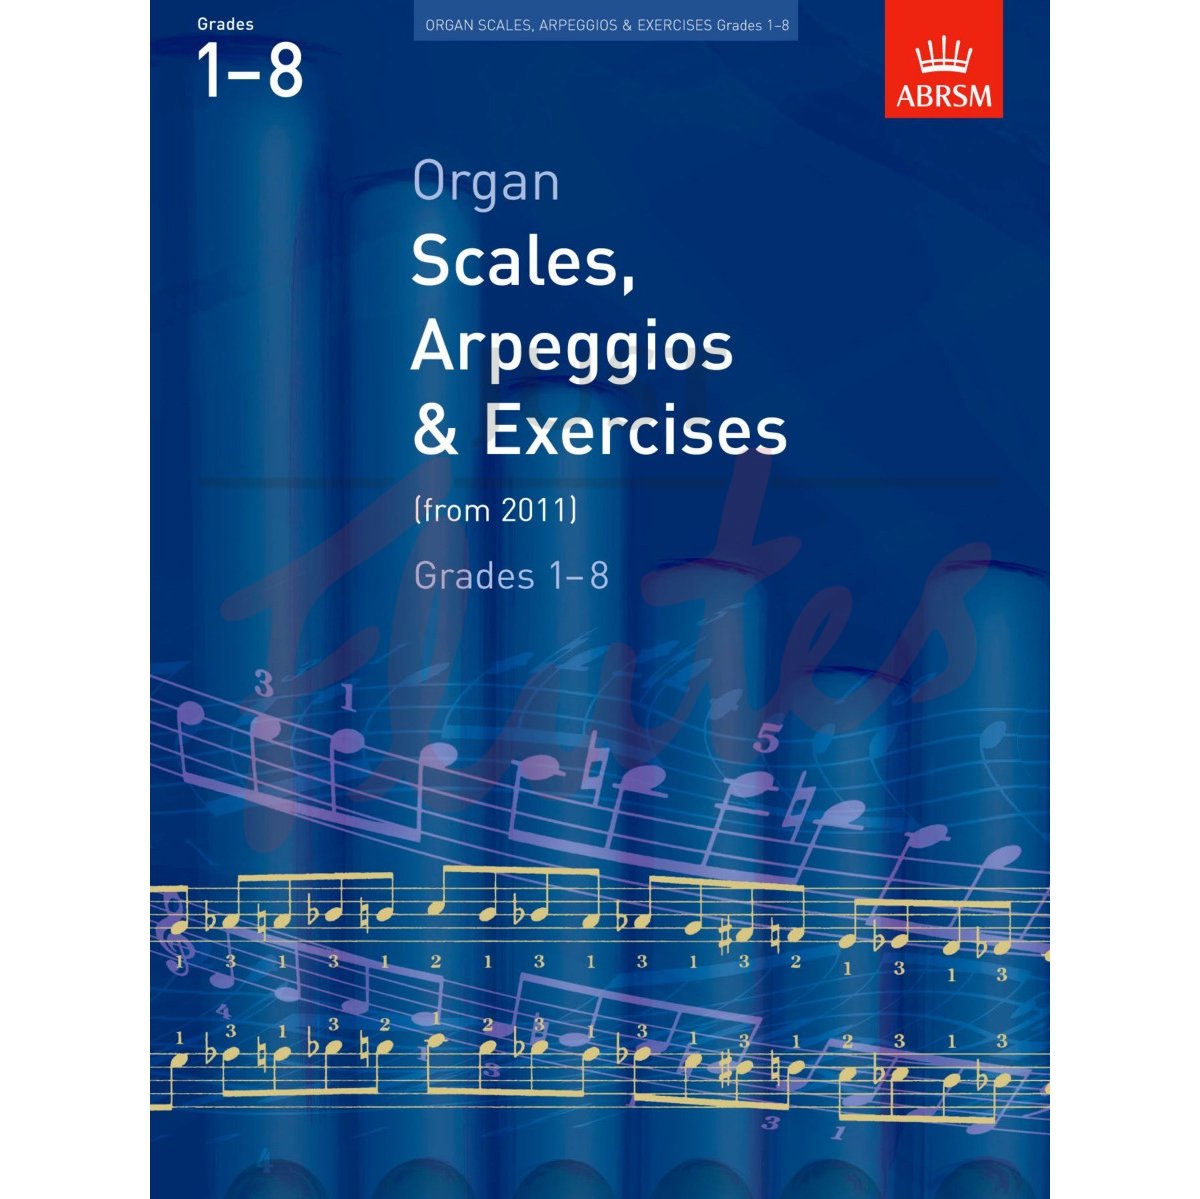 Organ Scales, Arpeggios &amp; Exercises Grades 1-8 from 2011